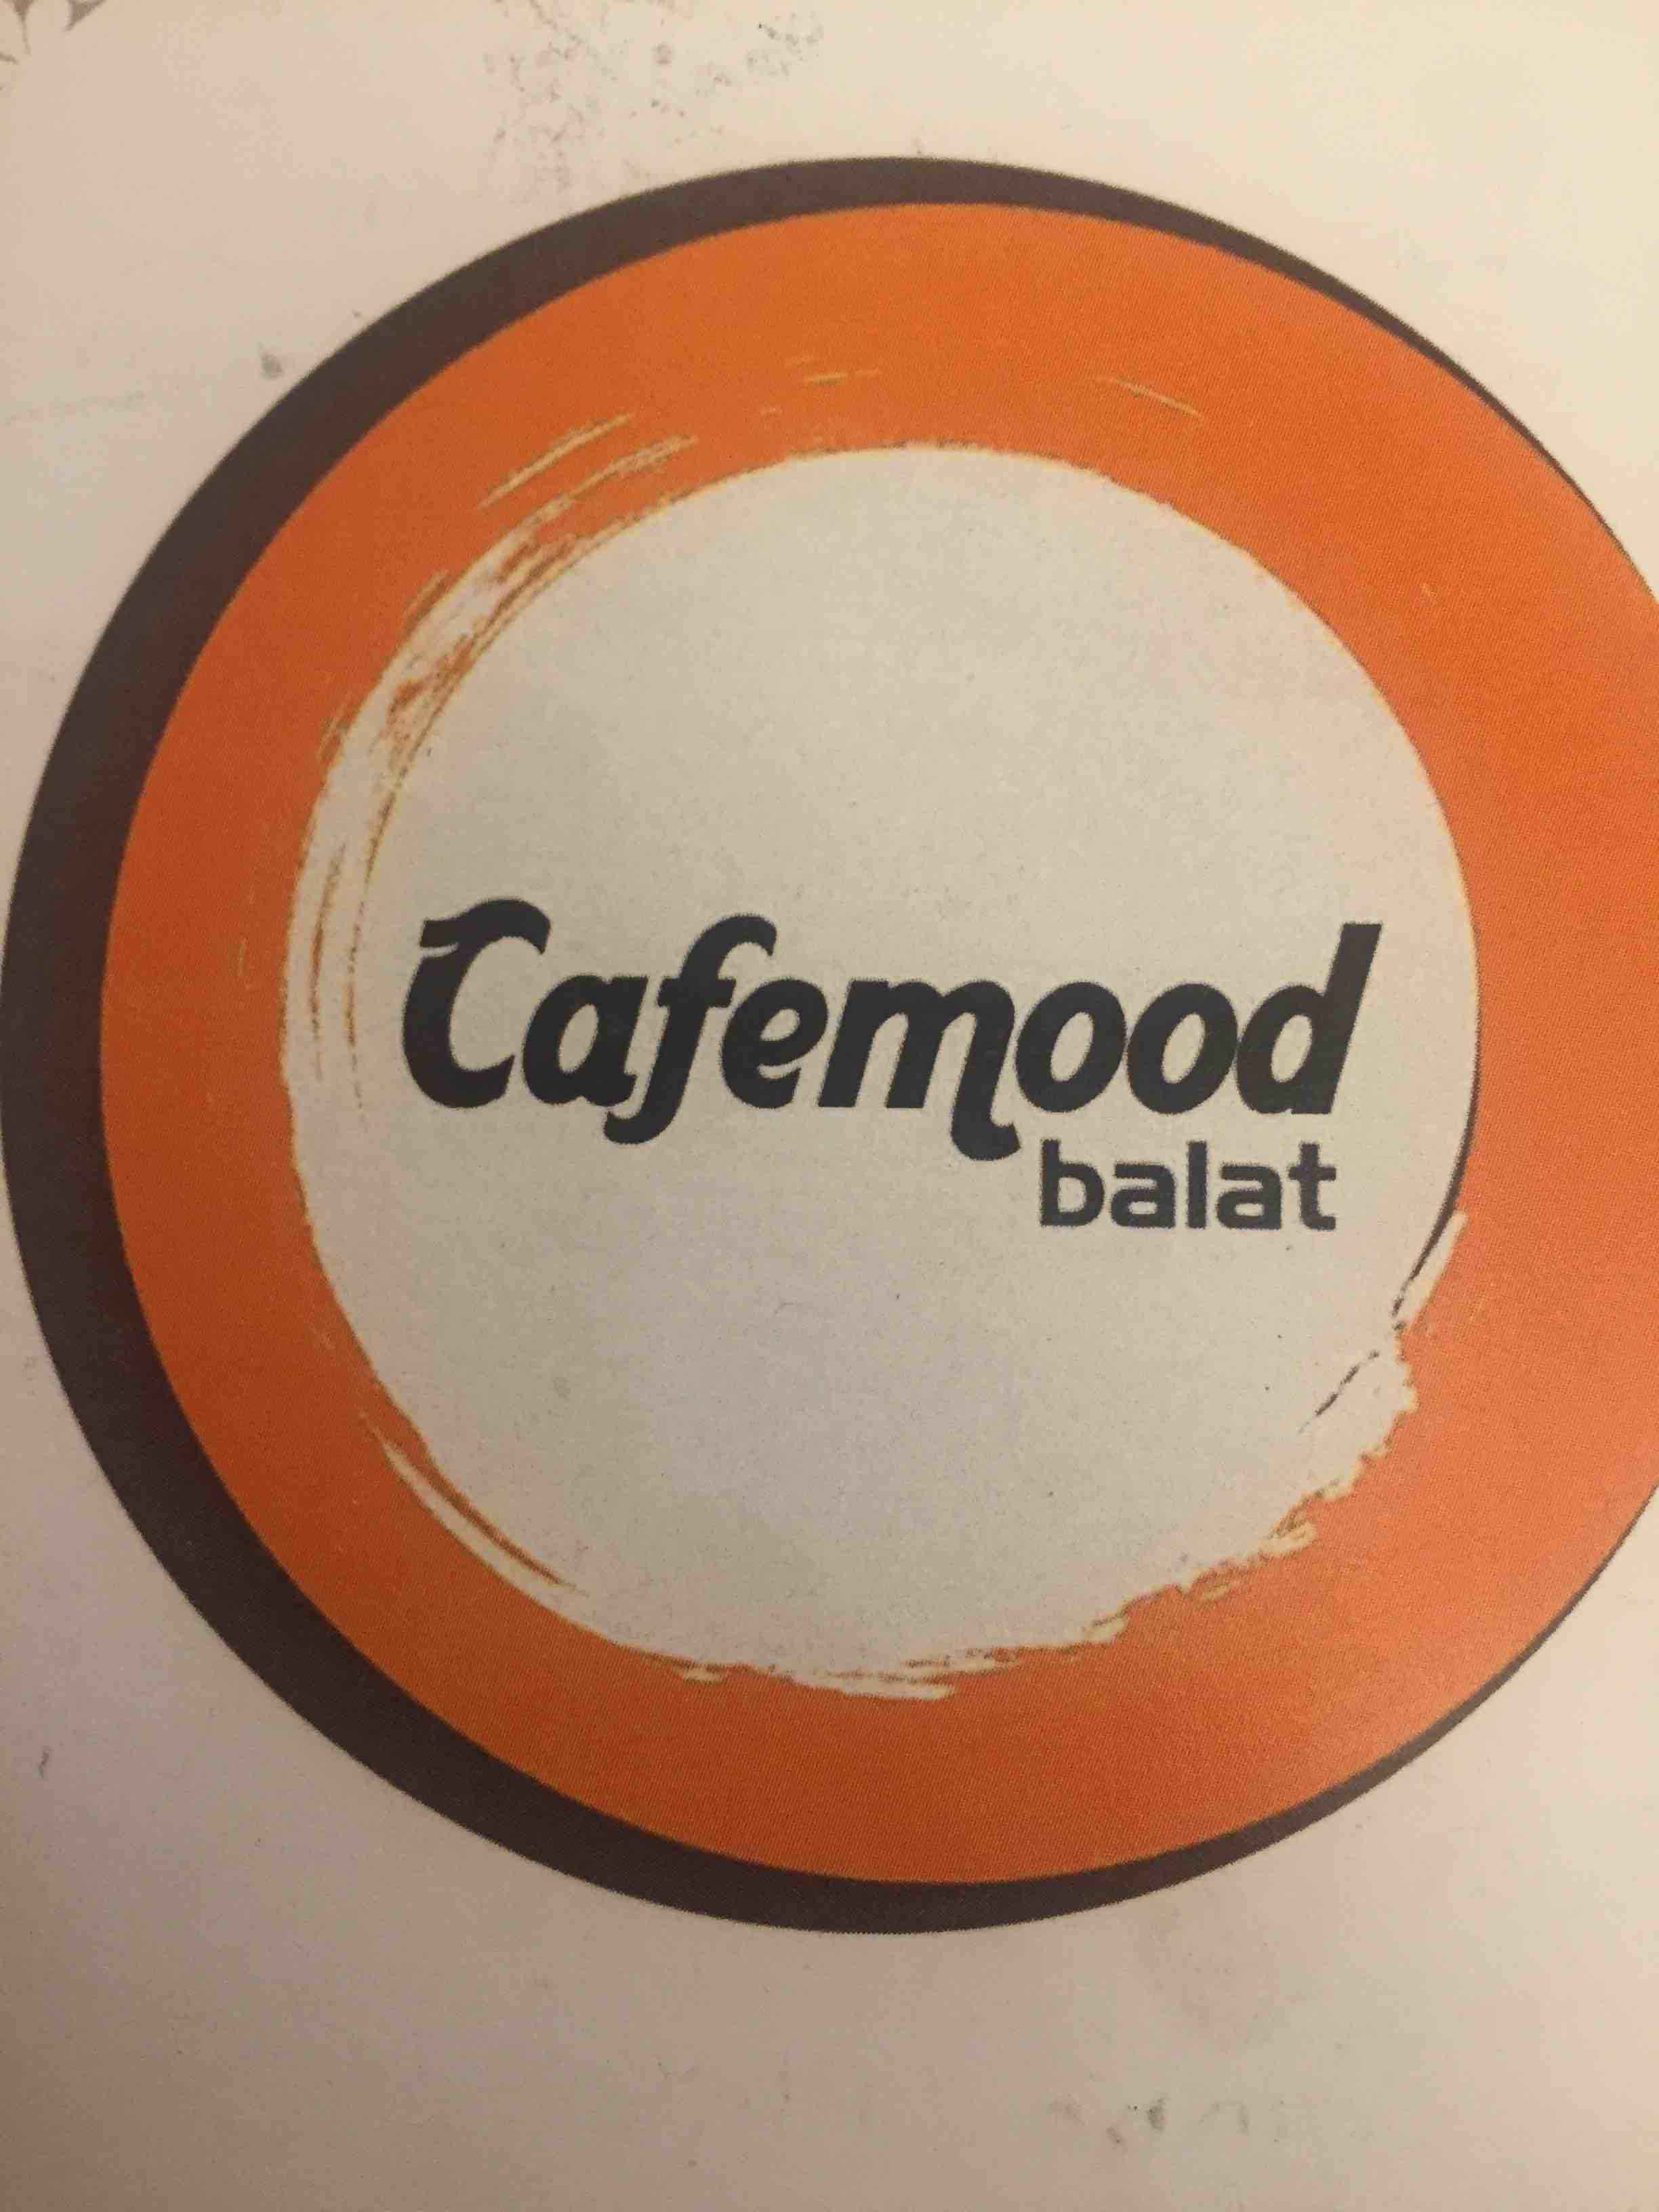 Cafemood Balat